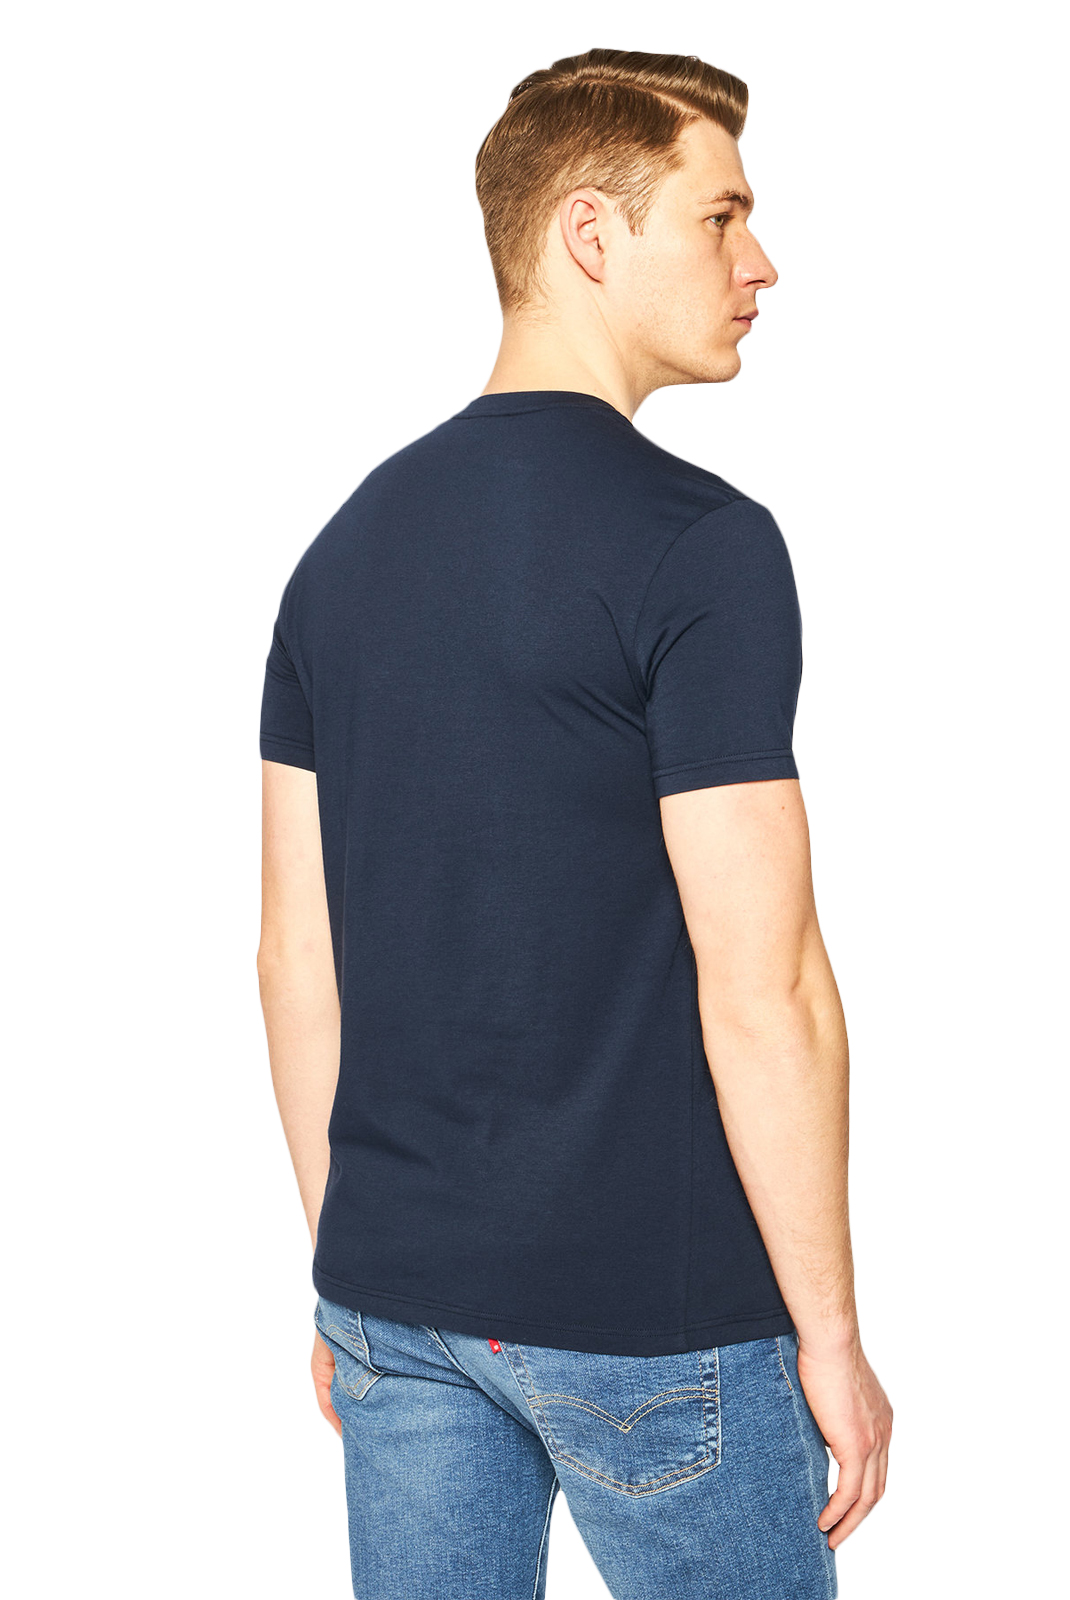 Emporio Armani Tee-shirt Bleu Marine à manches courtes 110853 0p510 